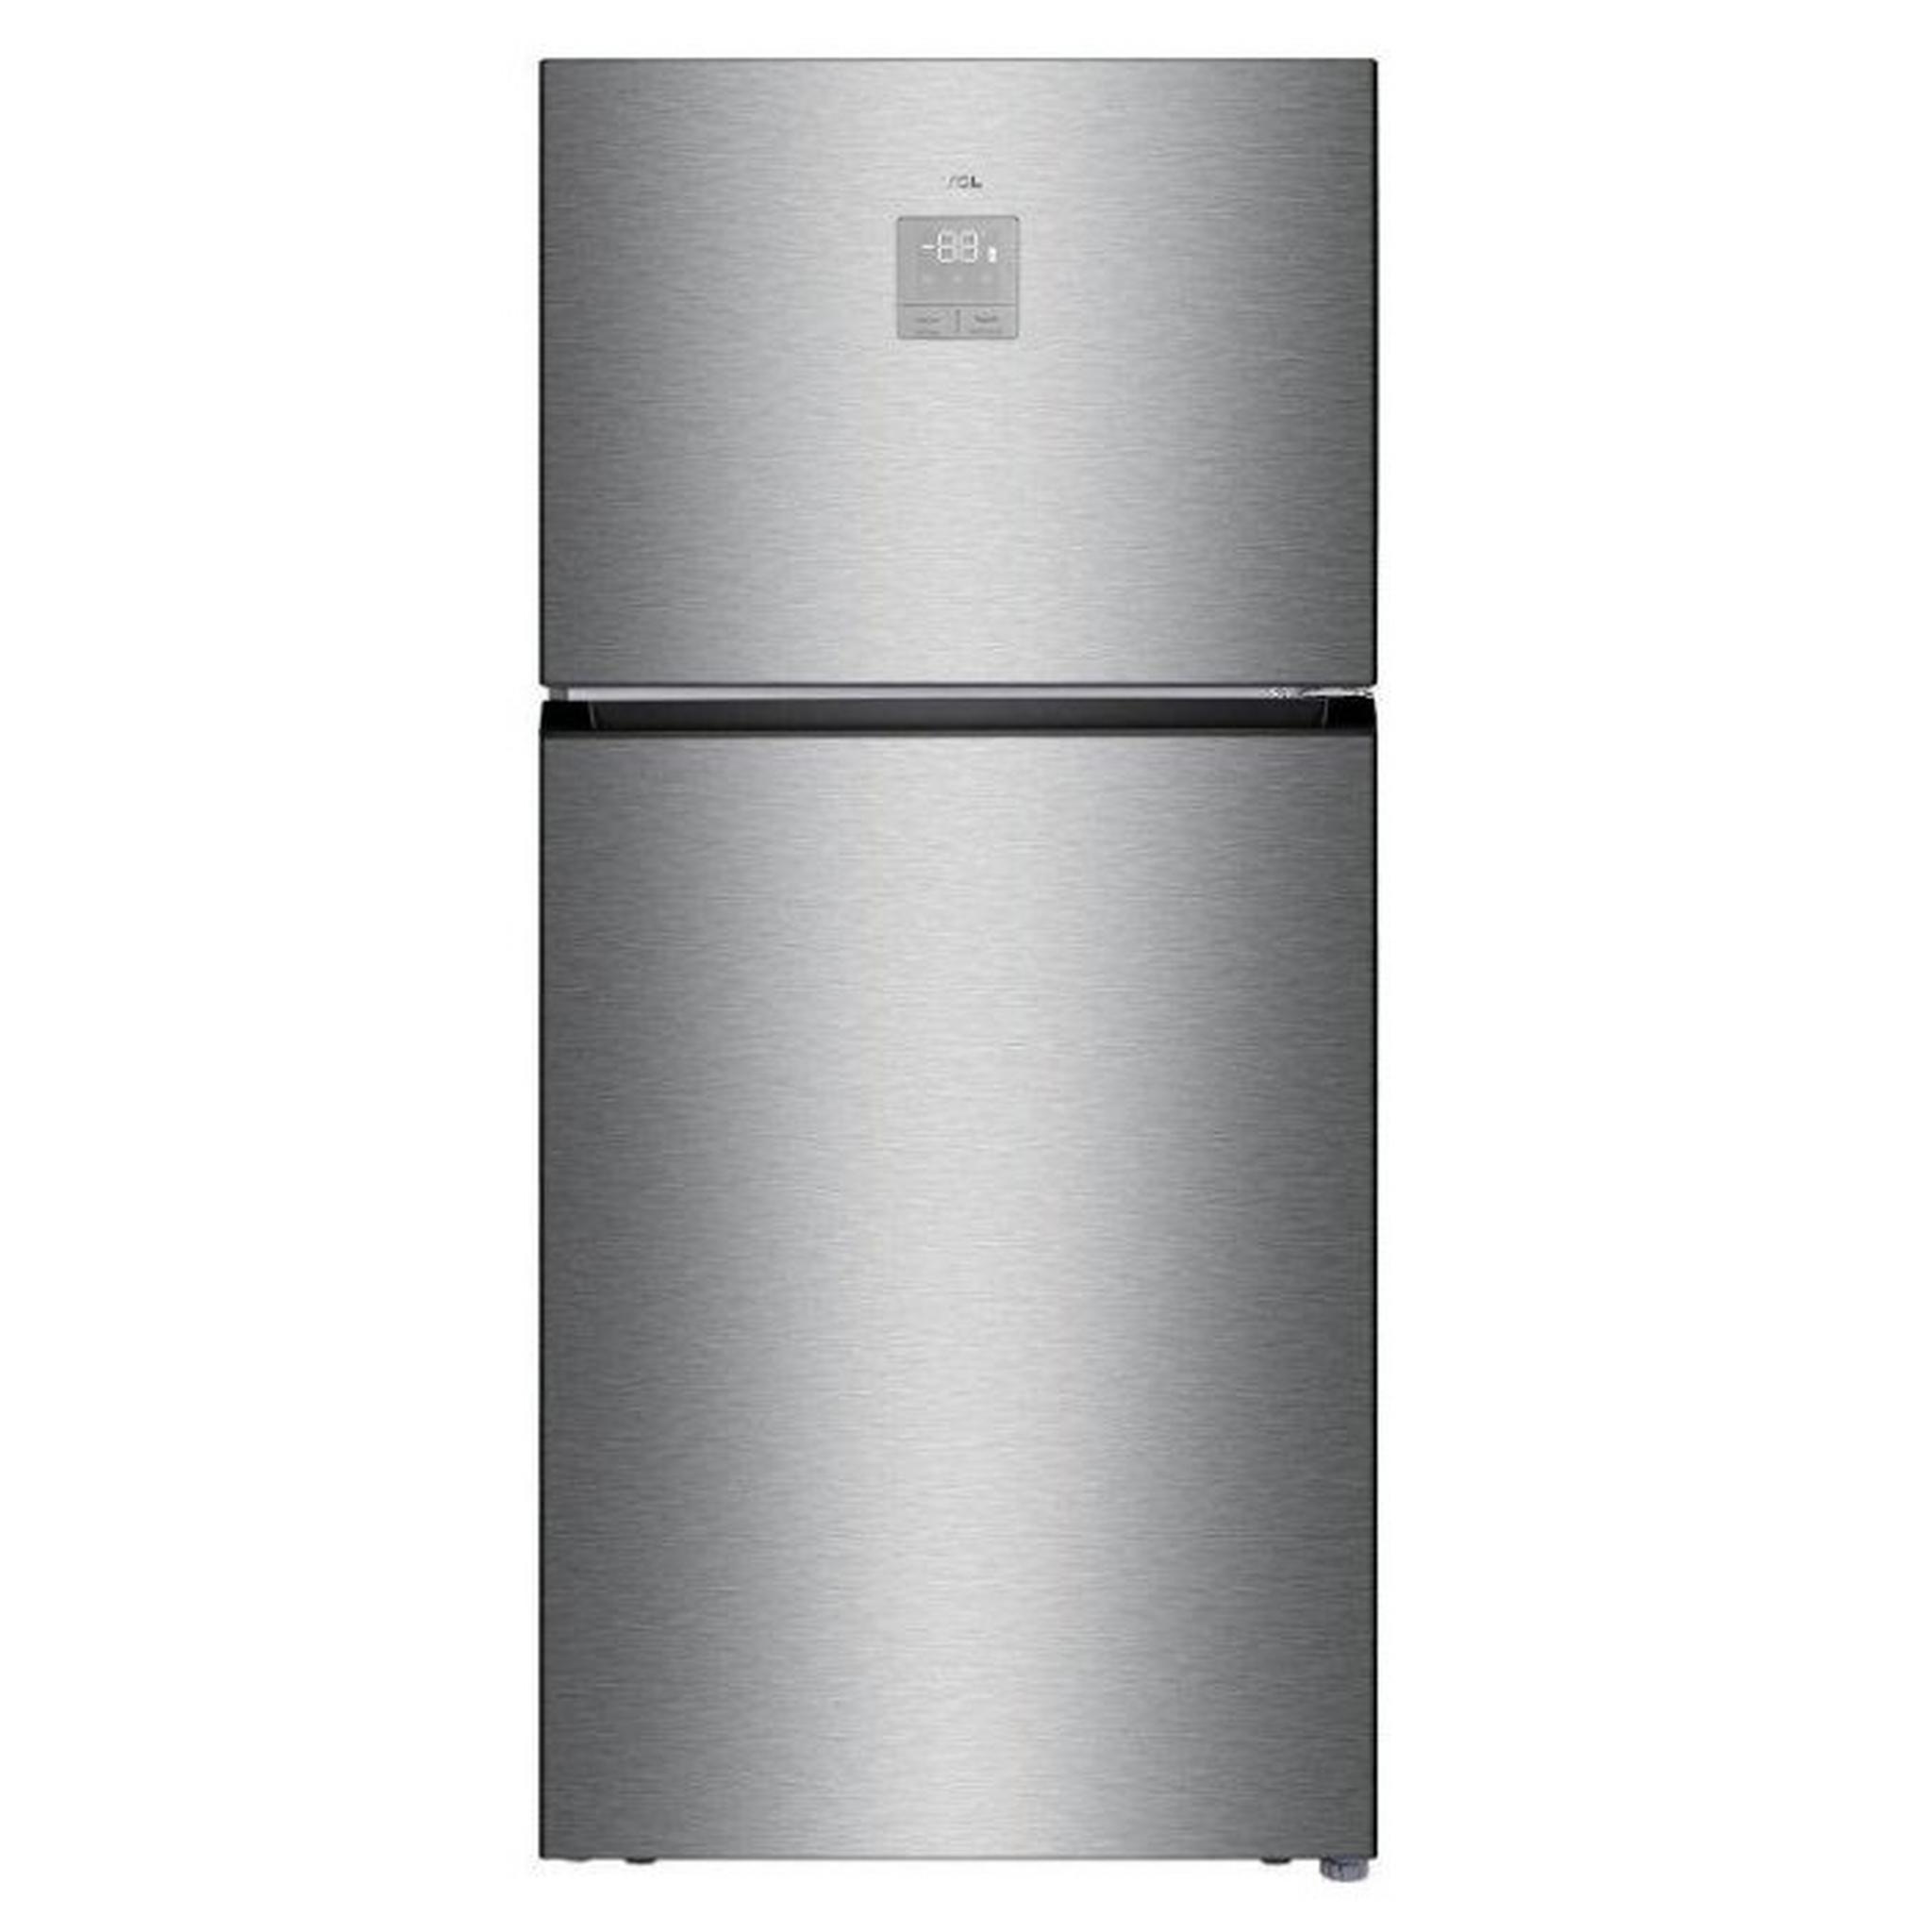 TCL Top Freezer Refrigerator, 27.8 CFT, 787 Liter, P787TMN - Inox